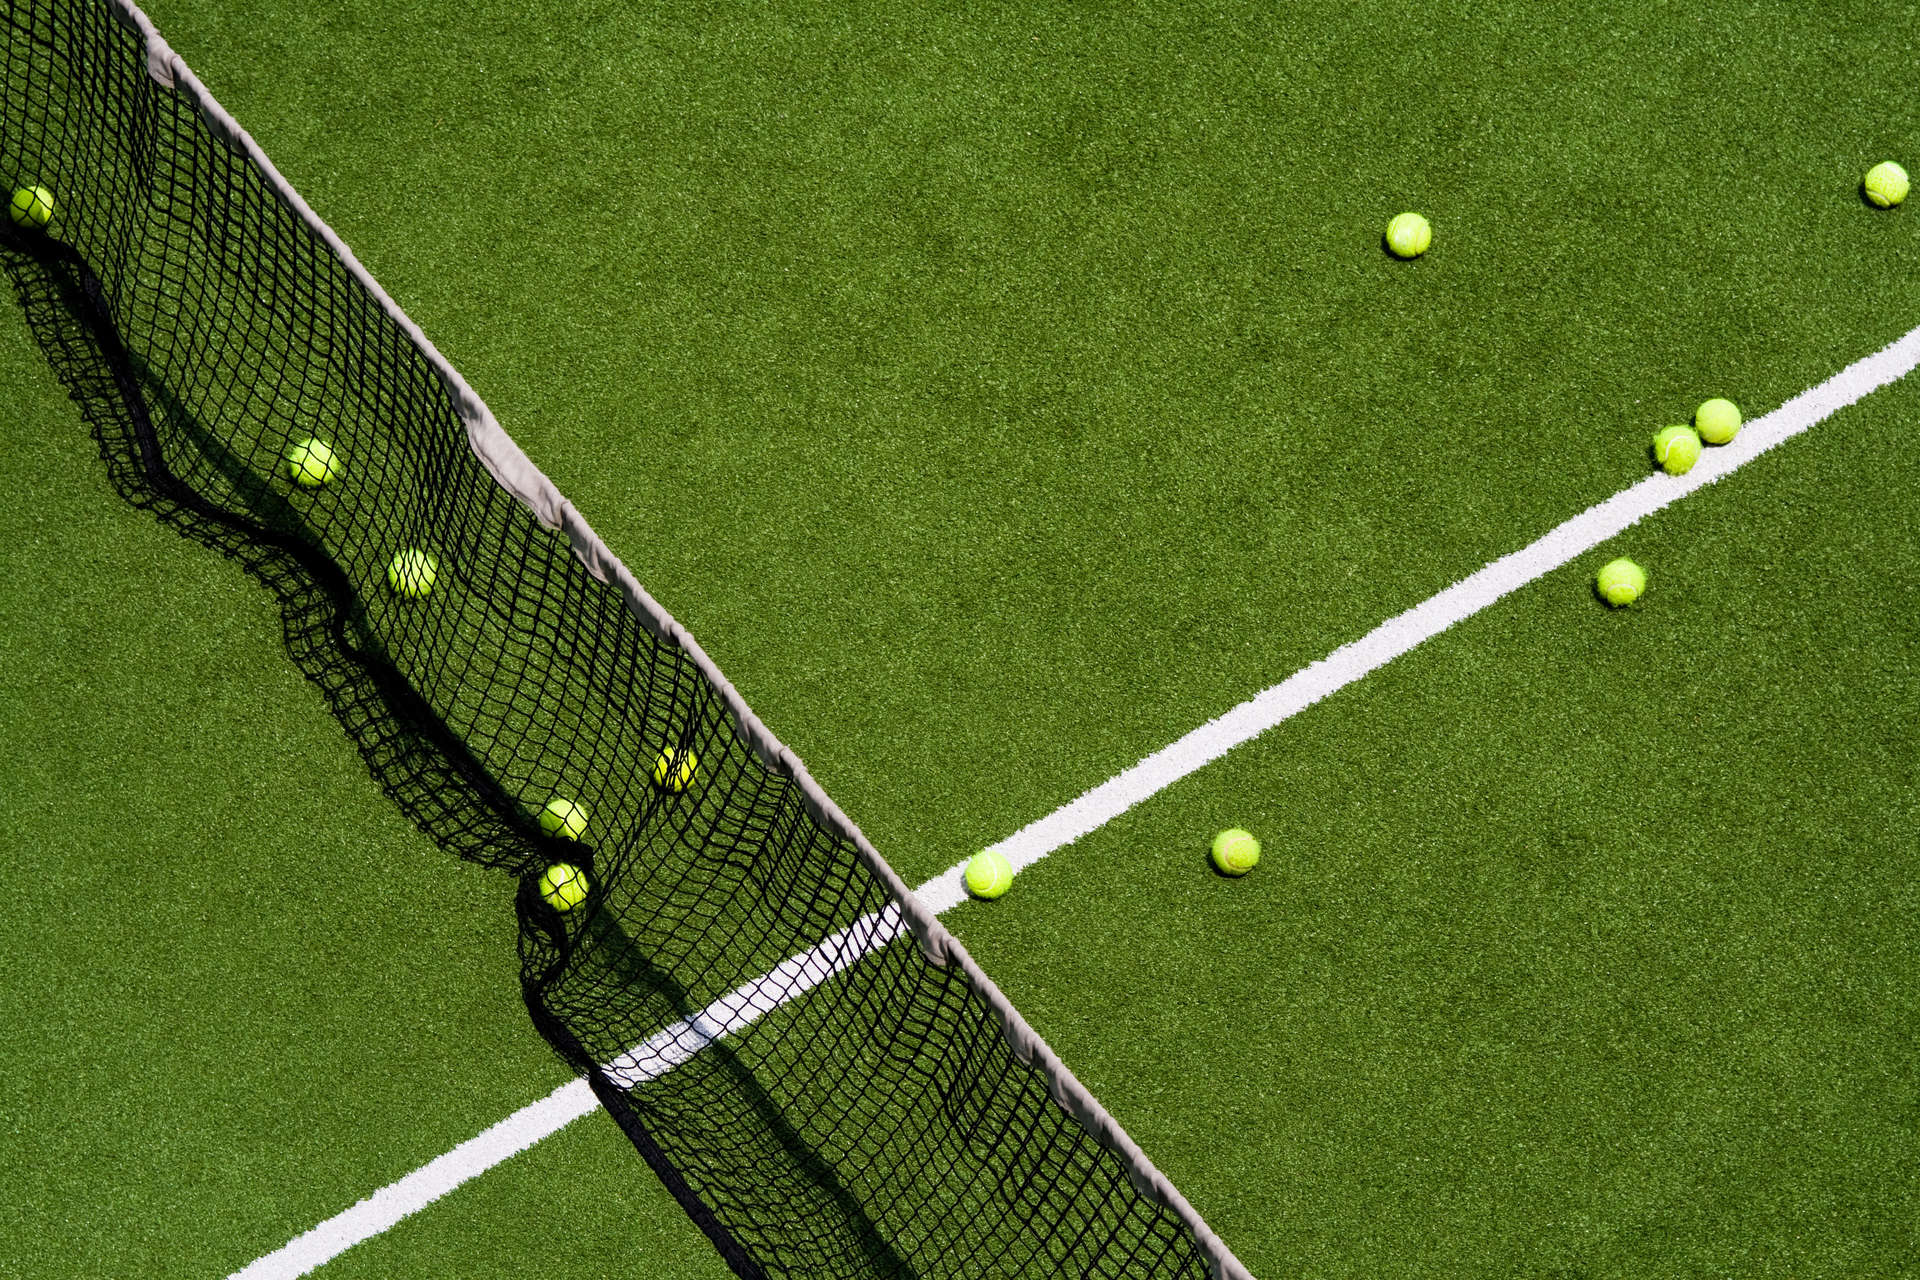 Tennis game in London